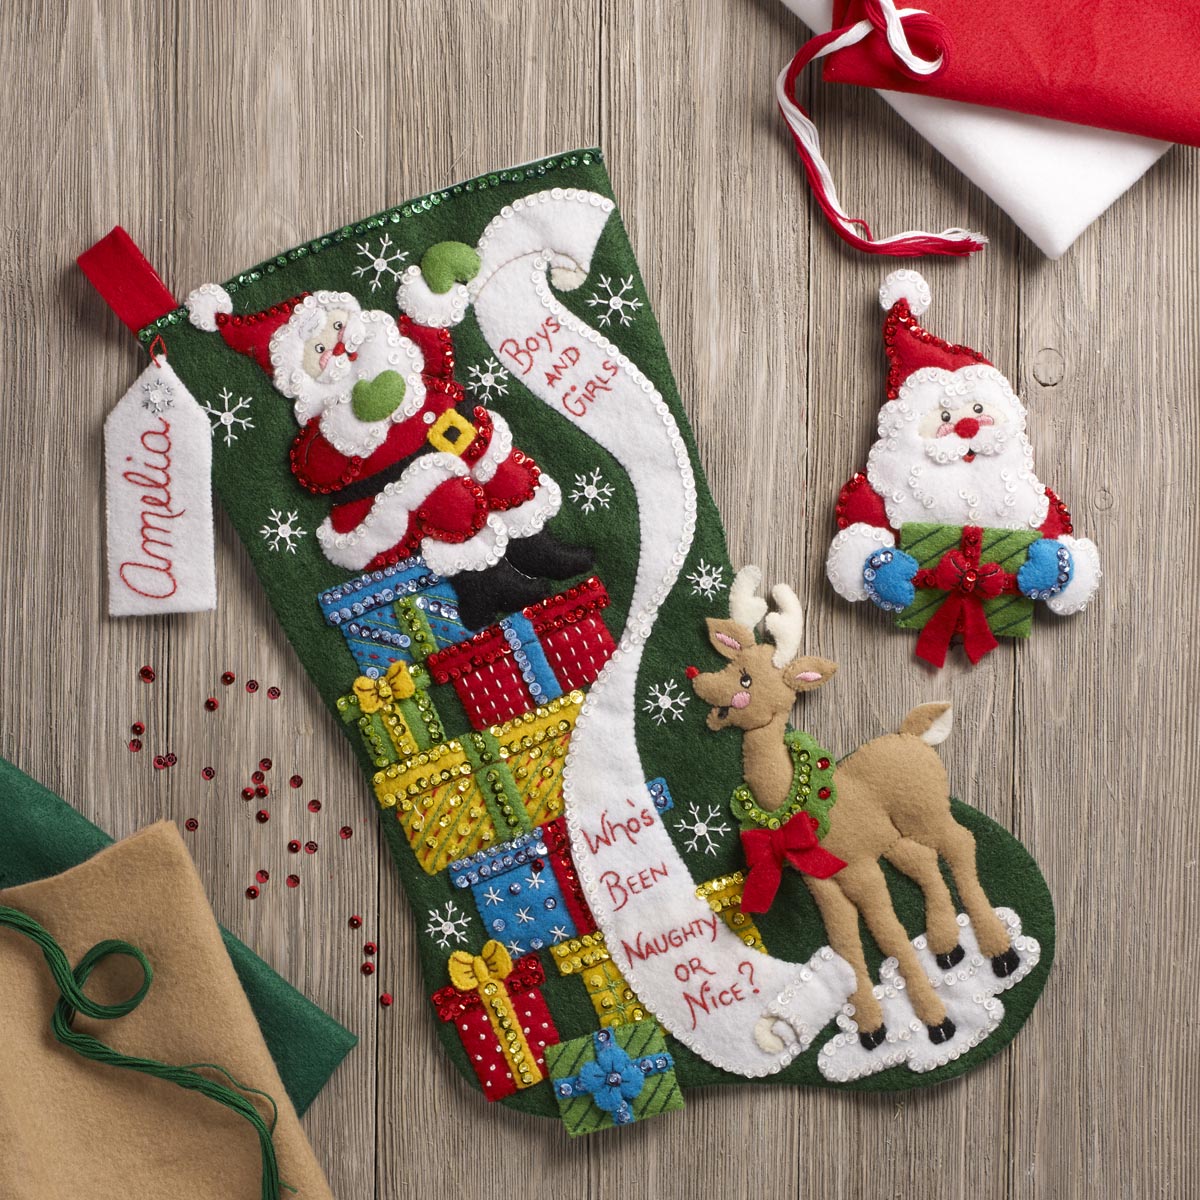 Shop Plaid Bucilla ® Seasonal Felt Stocking Kits The List 86712